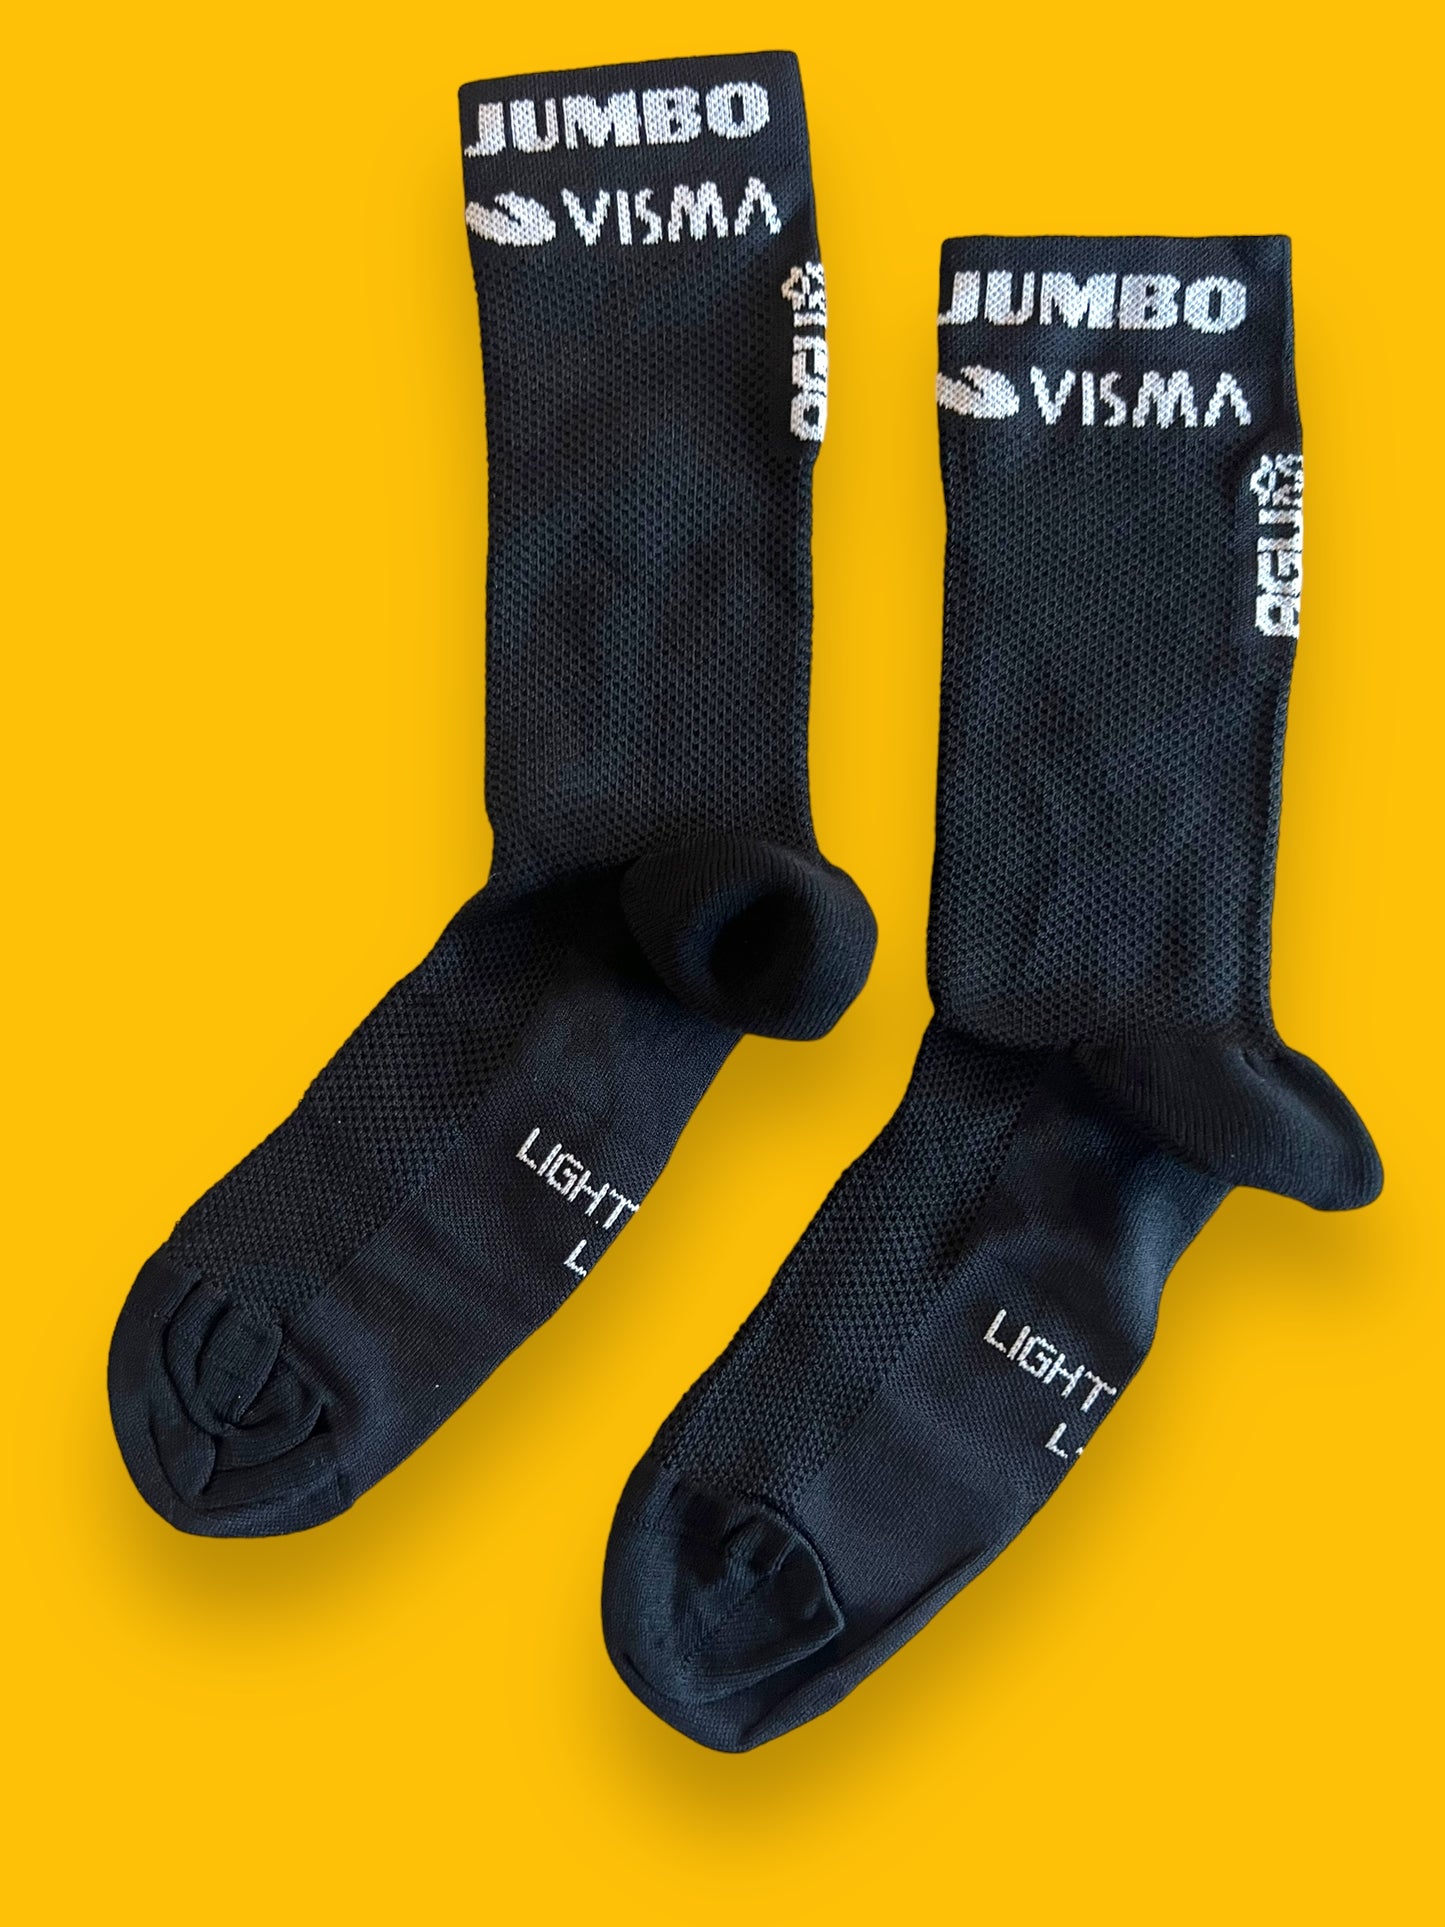 Light Race Socks | Agu | Jumbo Visma | Pro Cycling Kit